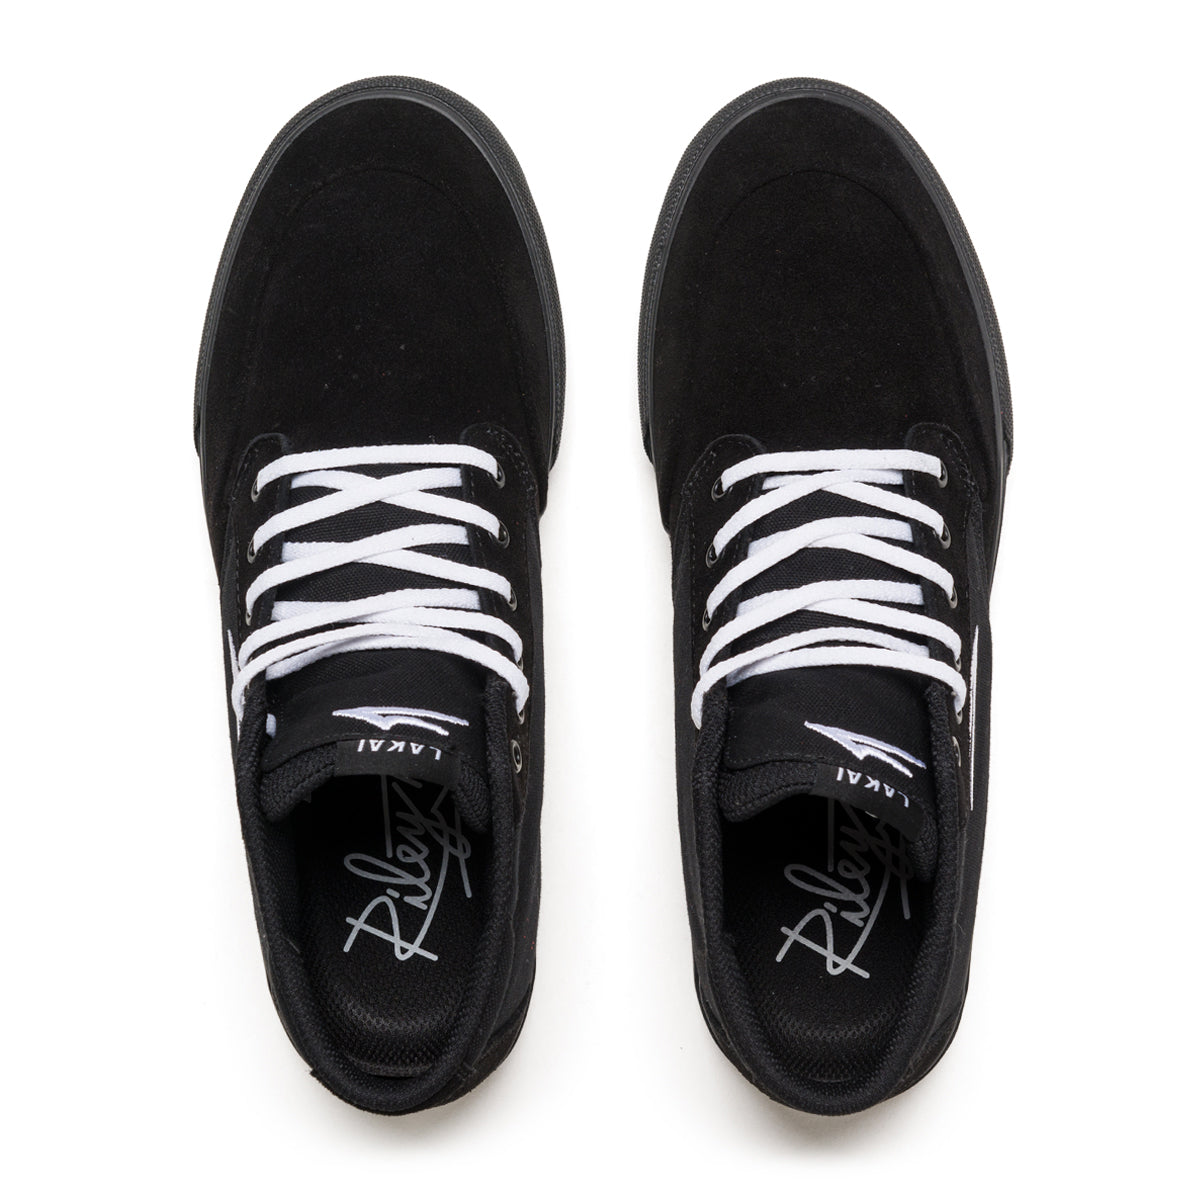 Riley 3 High - Black/Black Suede – Lakai Limited Footwear